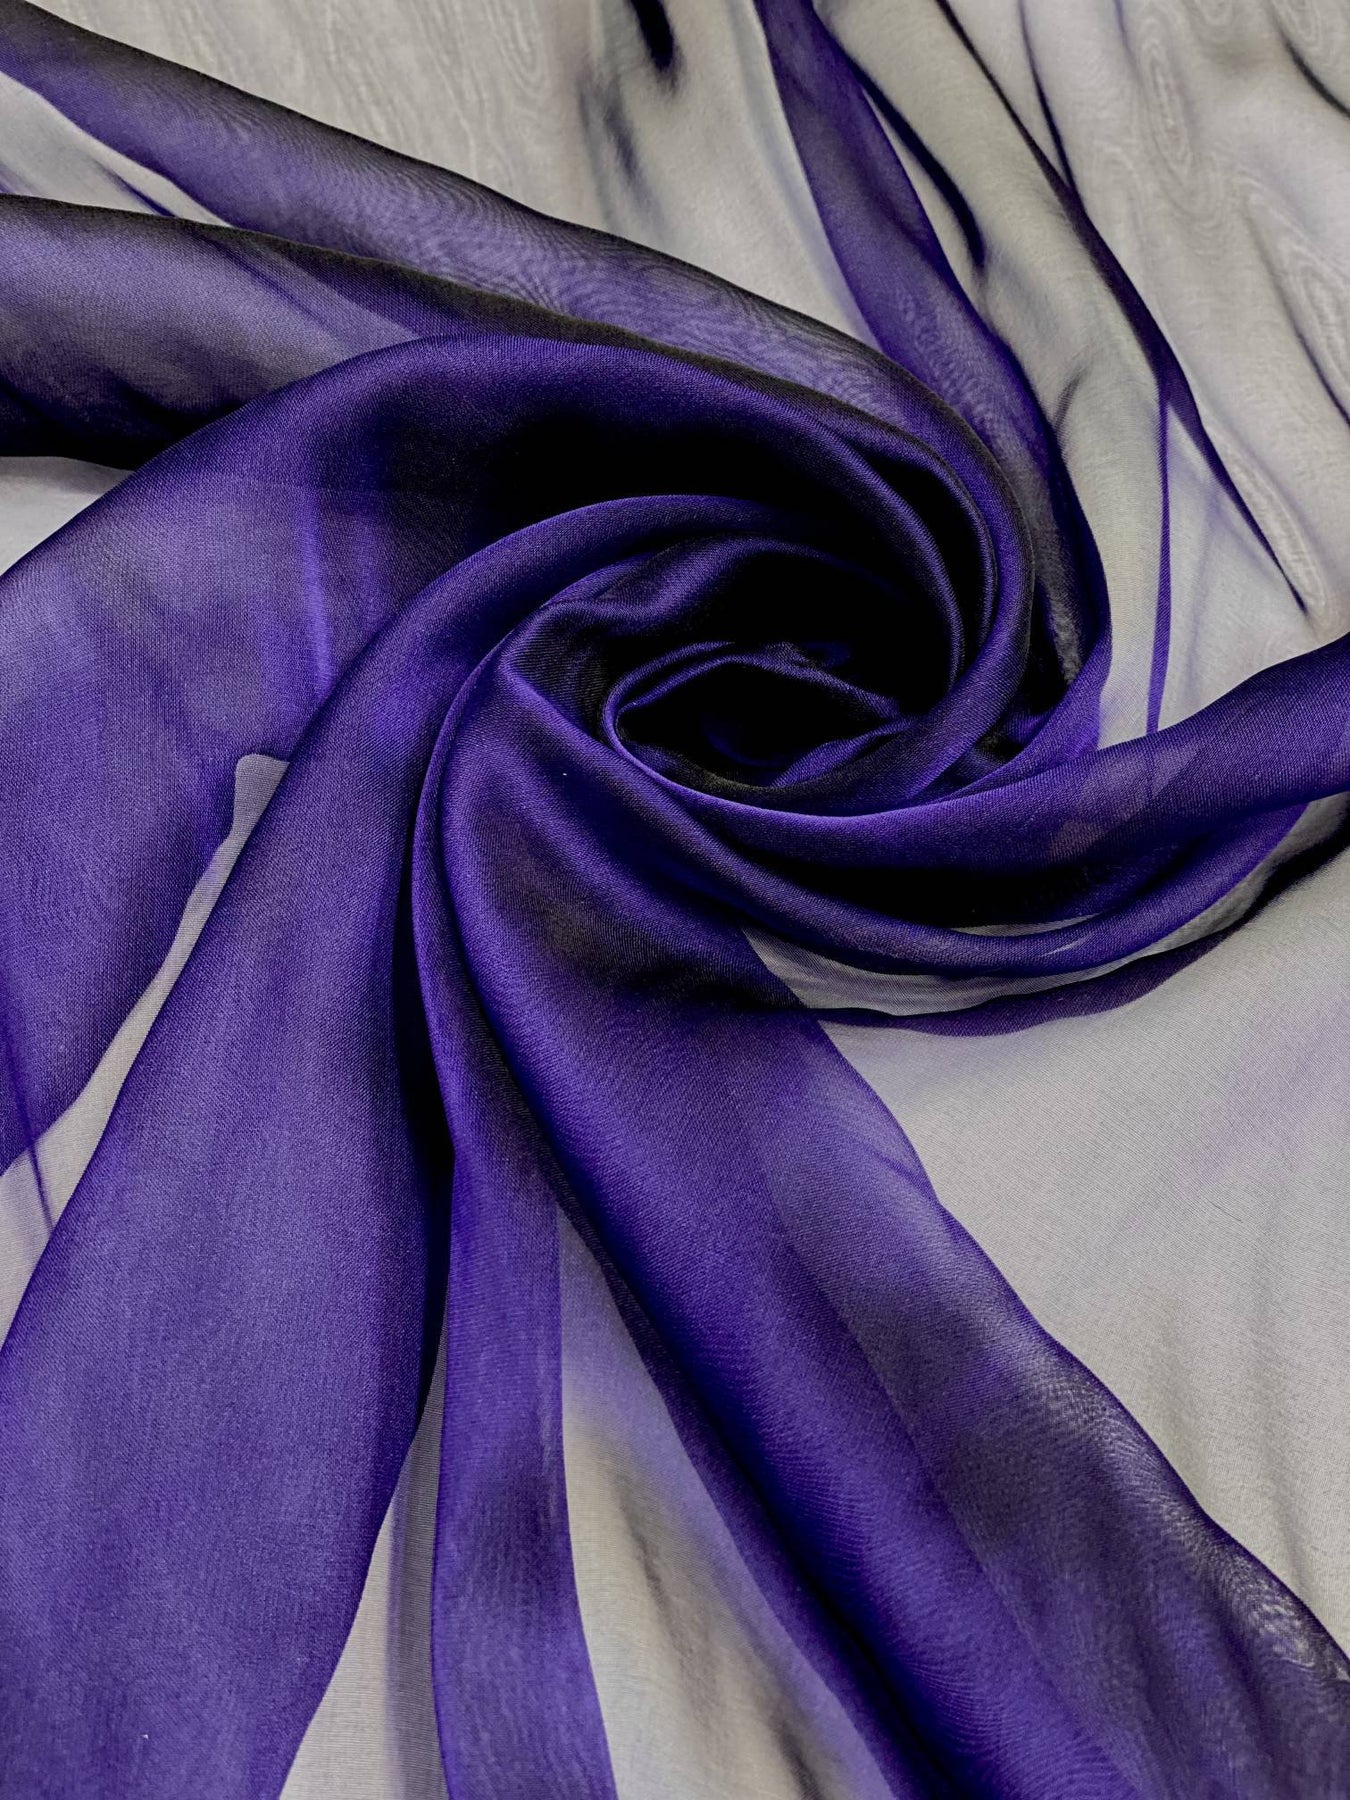 Imperial Purple Iridescent Silk Chiffon IC-011 Fabric By The Yard